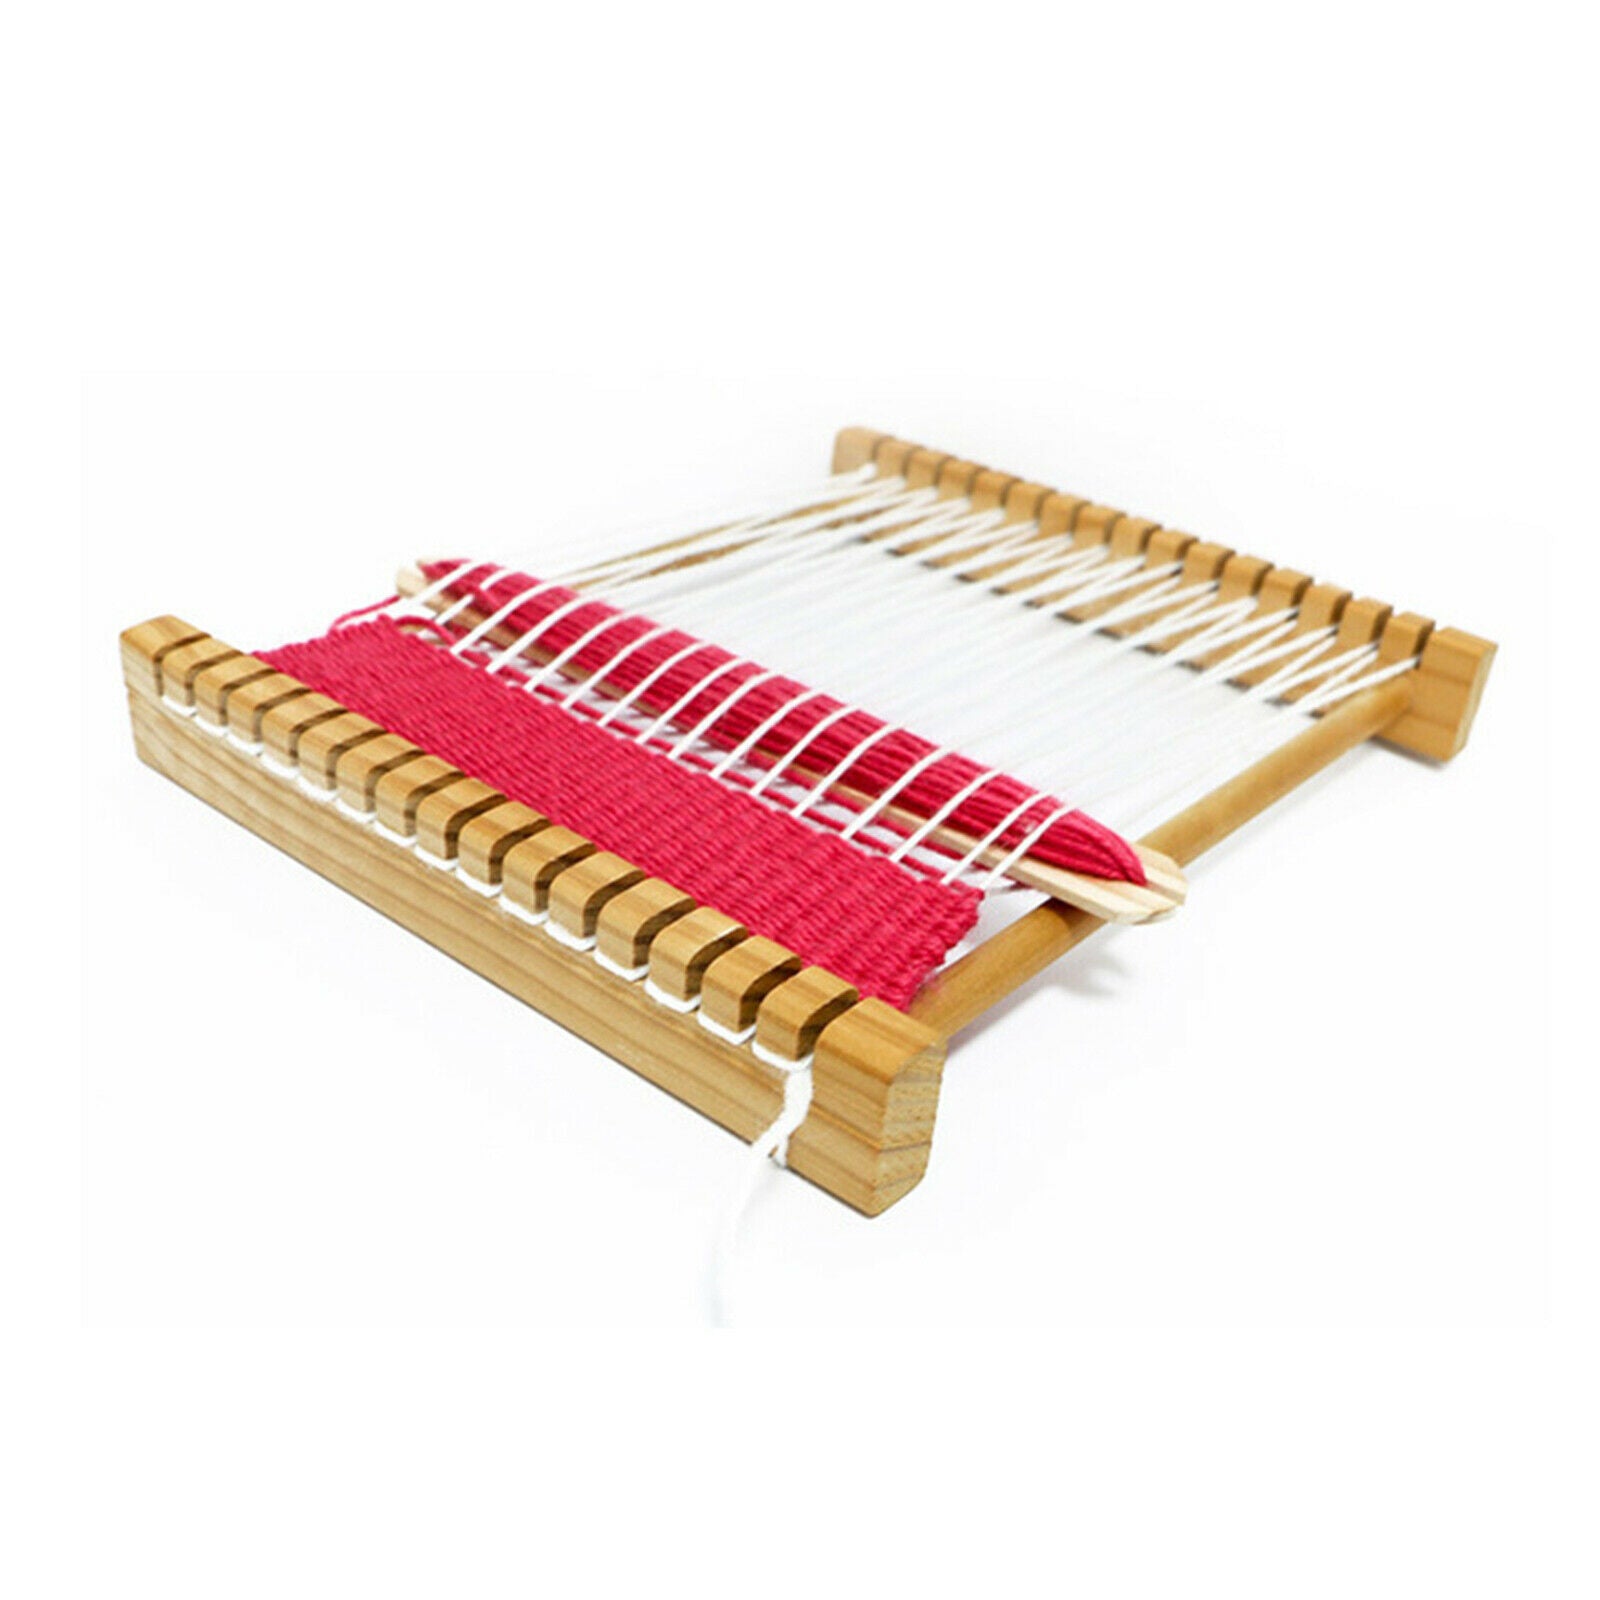 Wooden Weaving Loom Motor Skills Arts & Crafts Adjustable for Gift Present